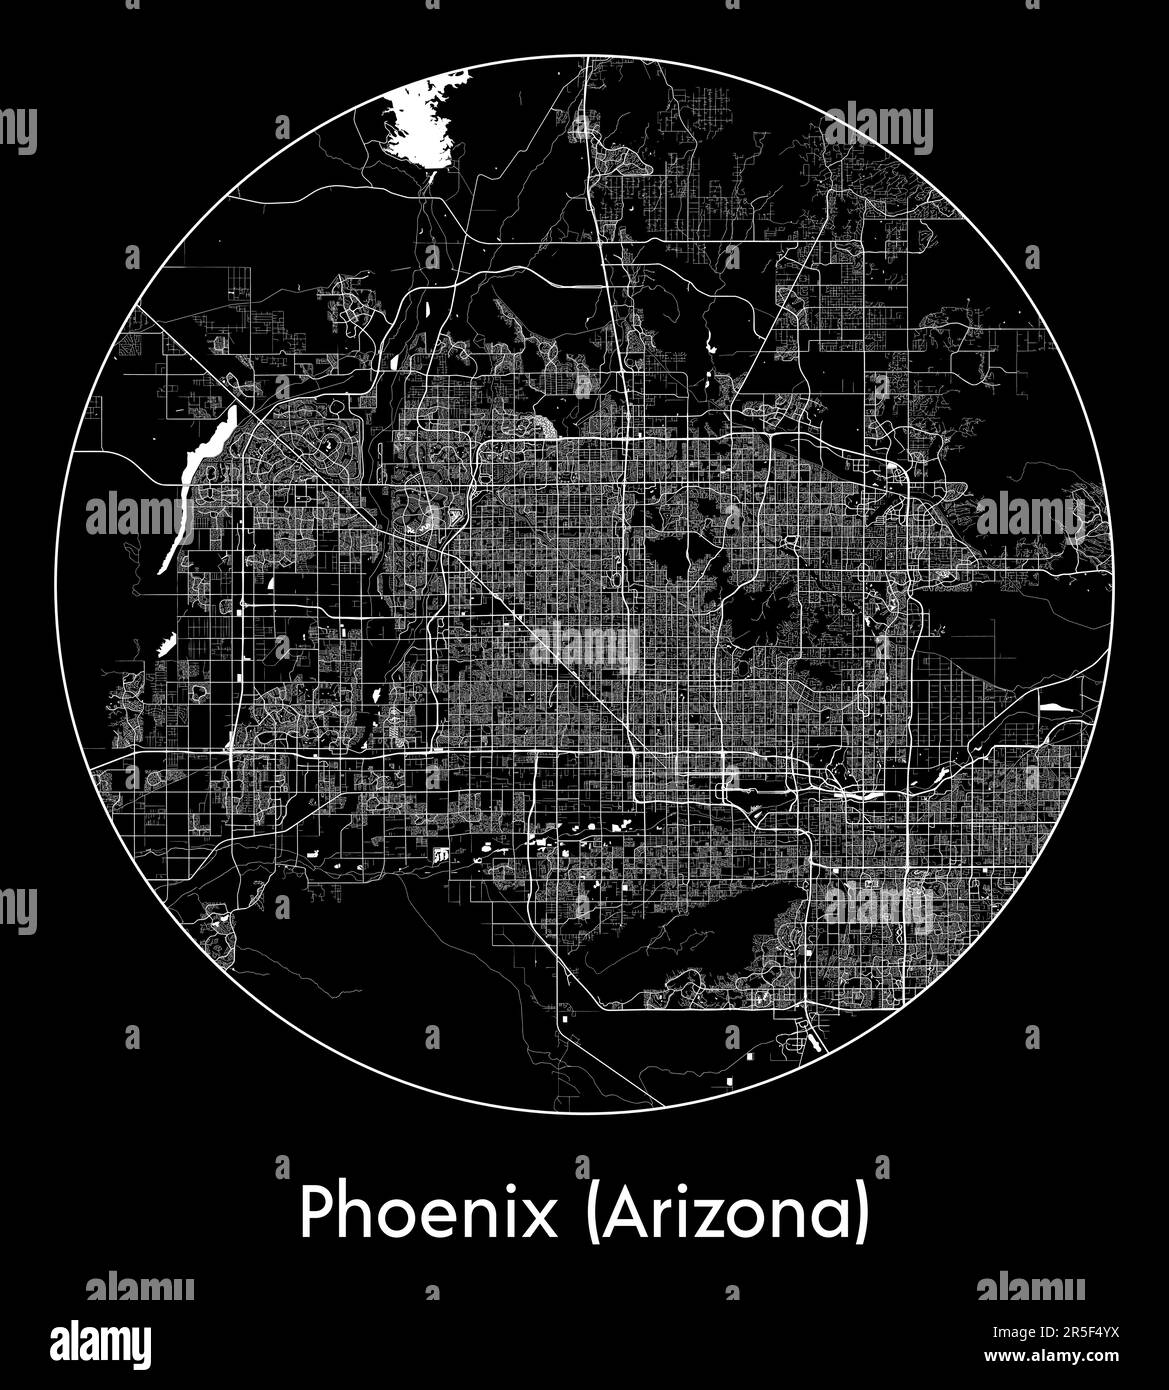 City Map Phoenix (Arizona) United States North America vector illustration Stock Vector